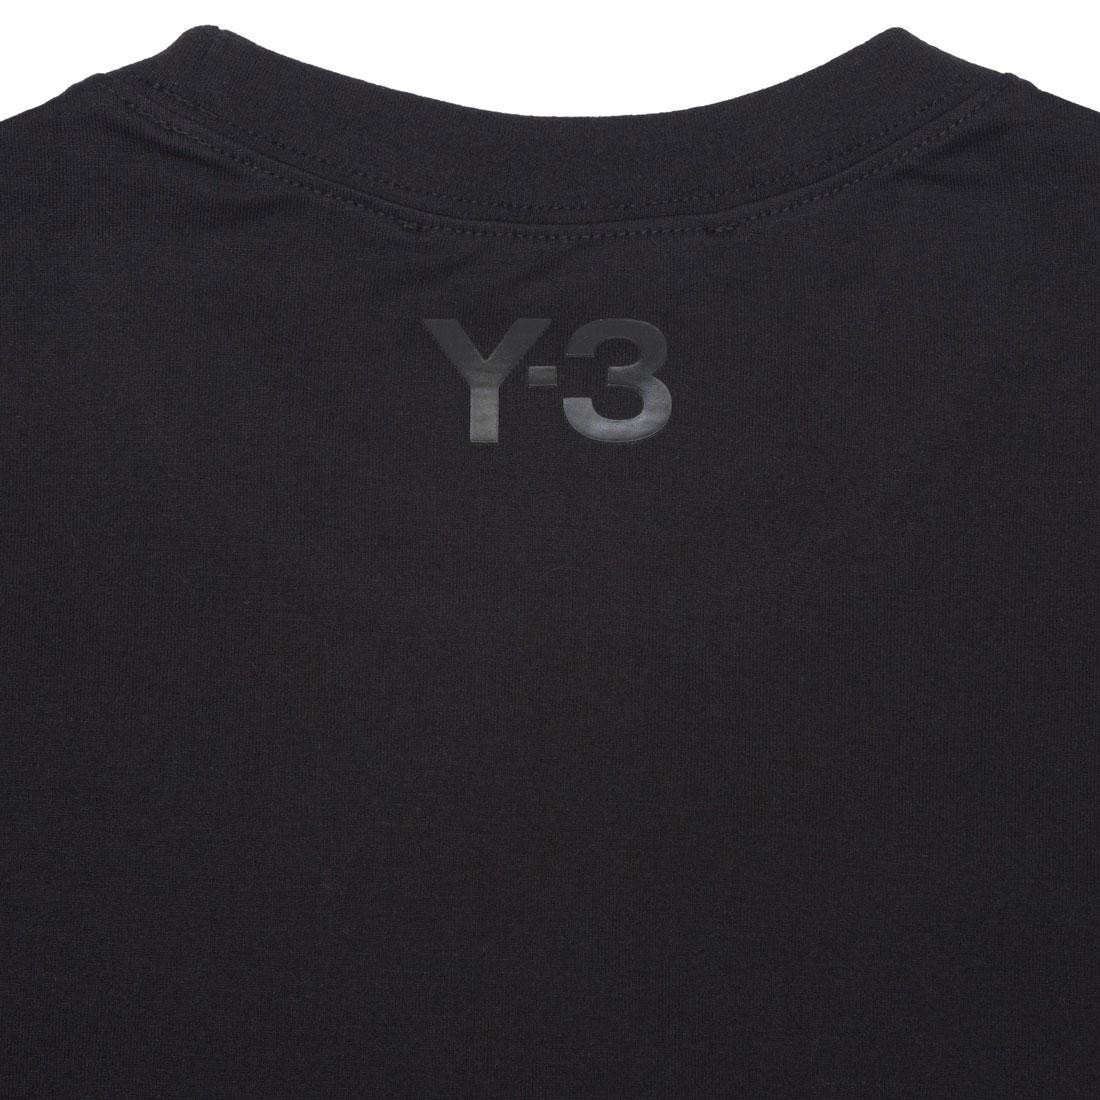 Adidas Y-3 Men Yohji Letters Short Sleeve Tee black off white